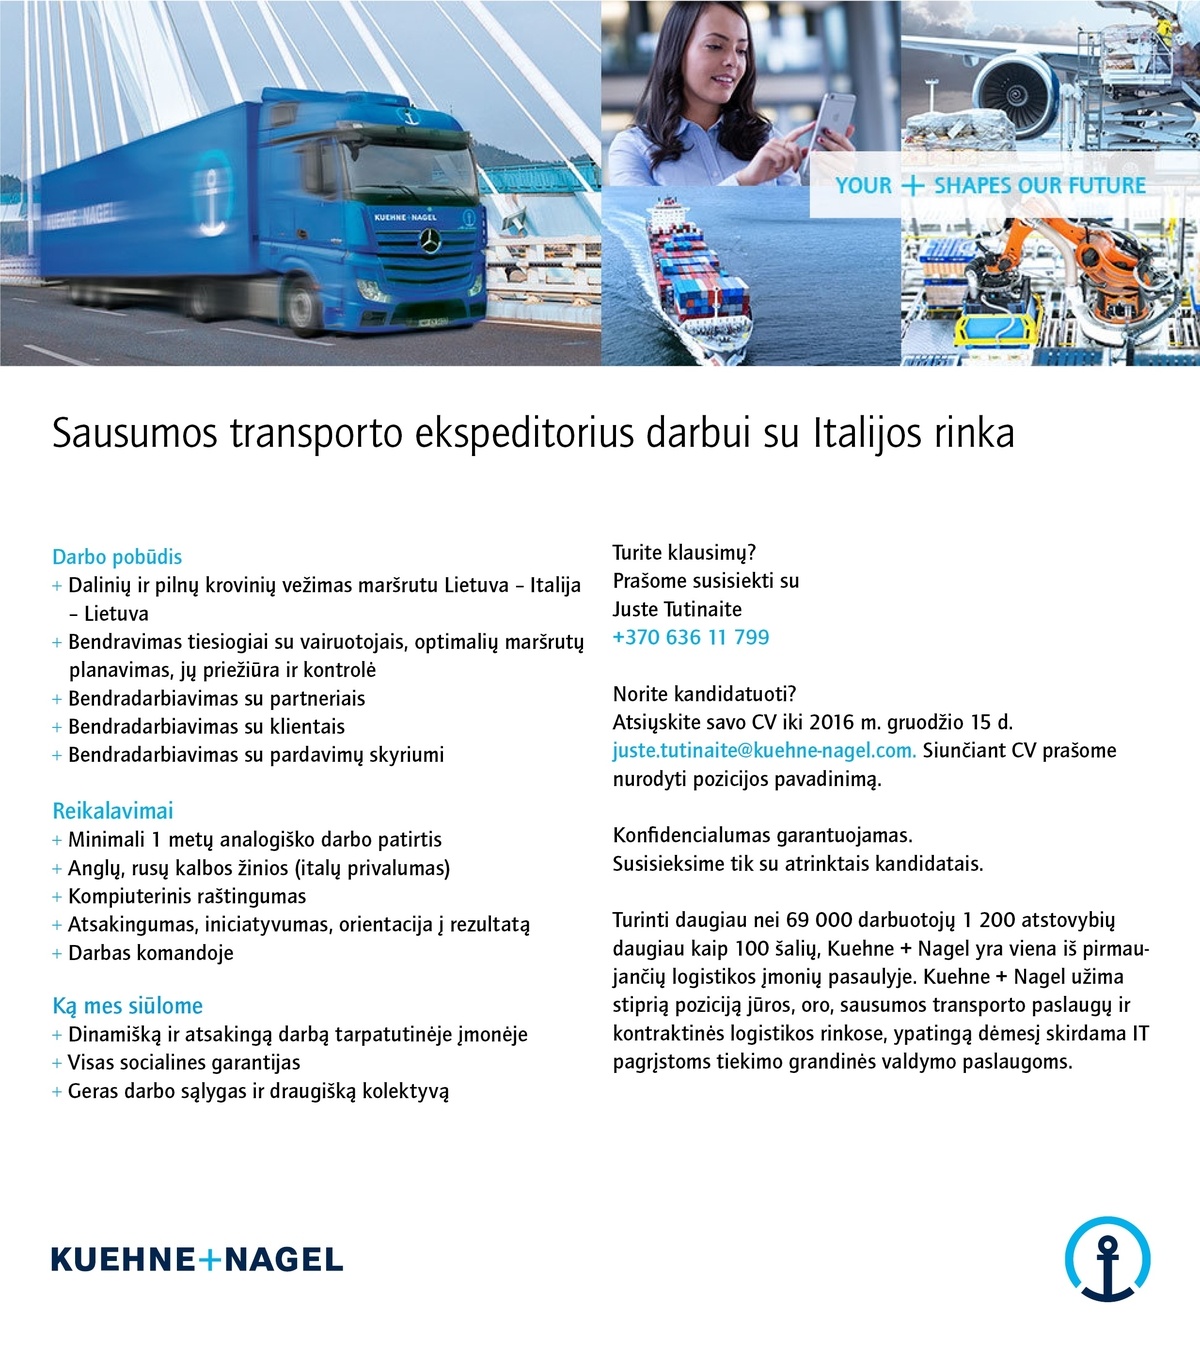 Kuehne + Nagel, UAB Ekspeditorius darbui su Italijos rinka